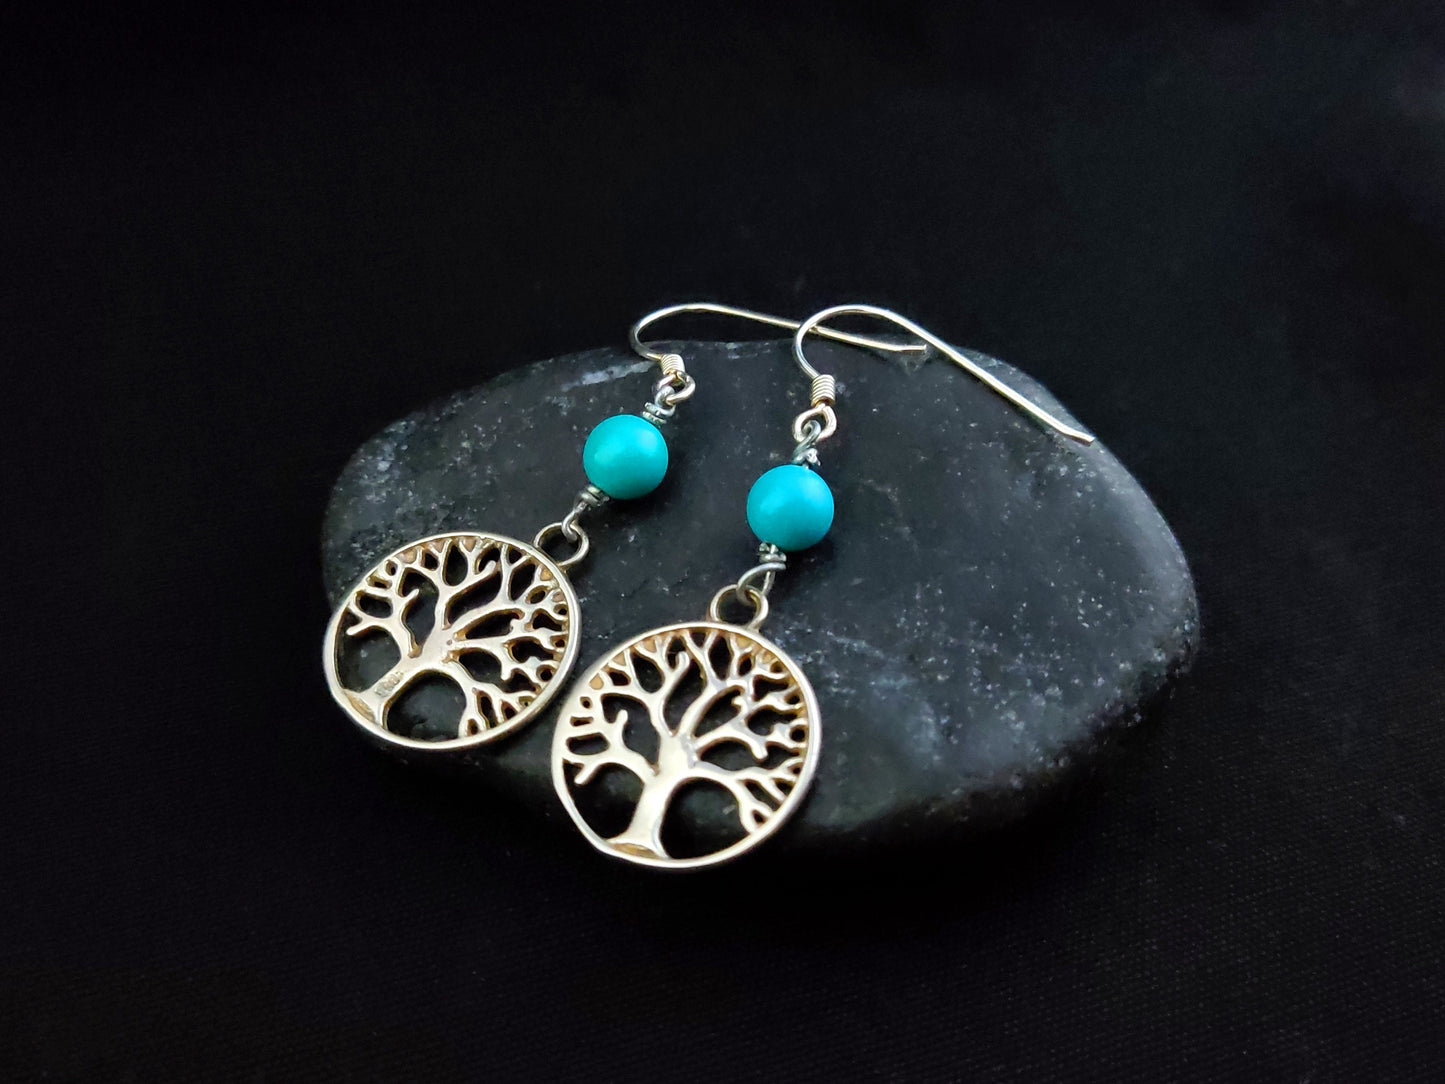 Tree Of Life & Turquoise Silver Earrings, Greek Handmade Jewelry, Lebens Baum Silber Ohrringe, Turquoise Dangle Long Earrings From Greece